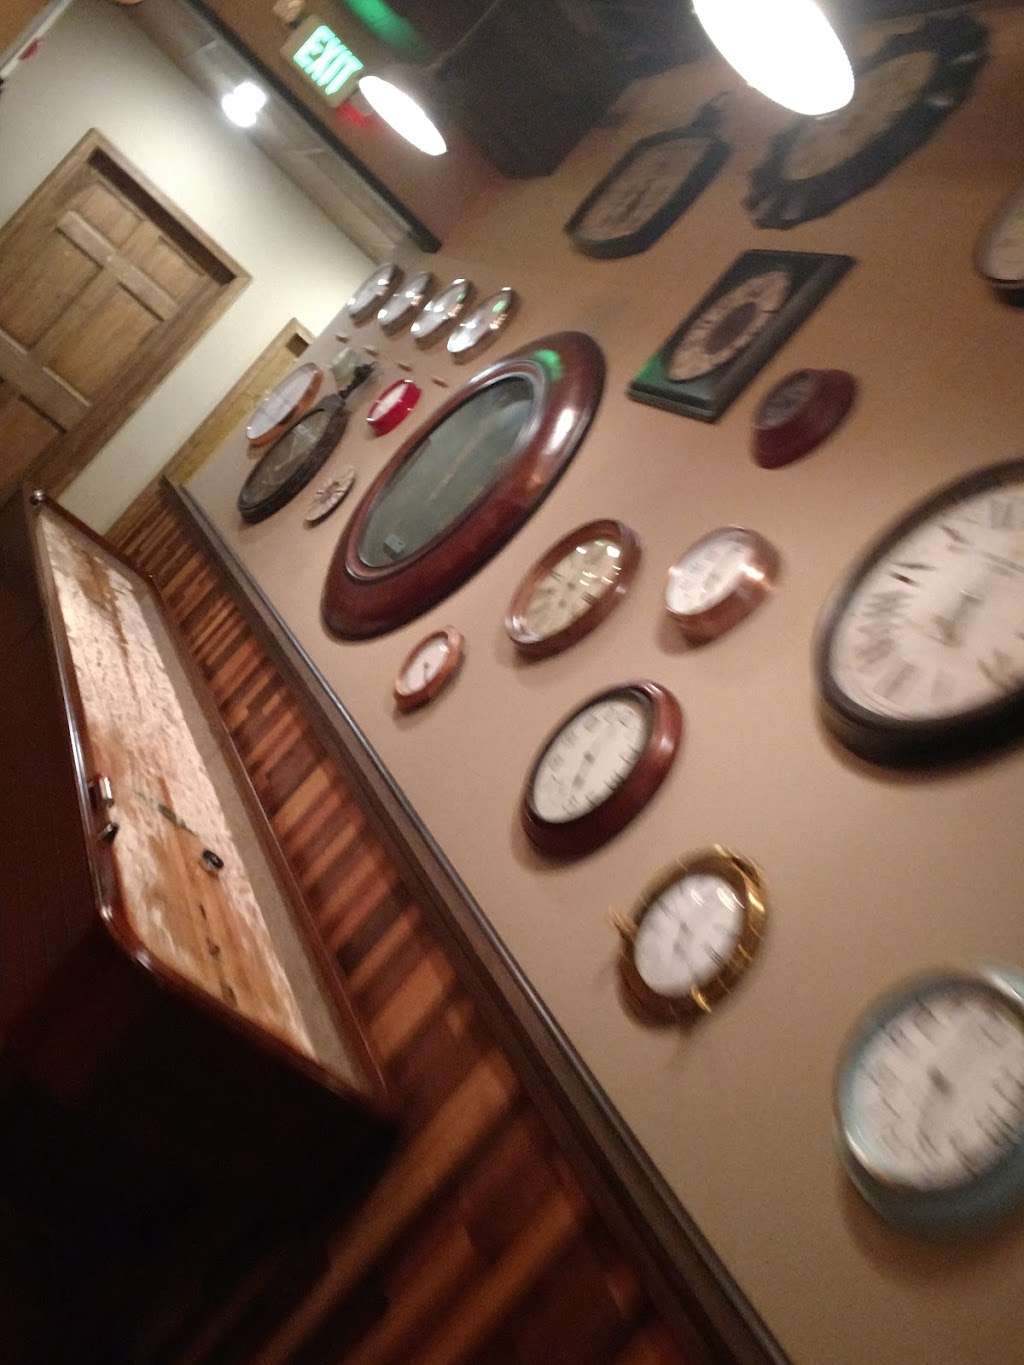 Clock Restoration Bar & Kitchen | F6, 31 S Calvert St, Baltimore, MD 21202, USA | Phone: (443) 203-1888